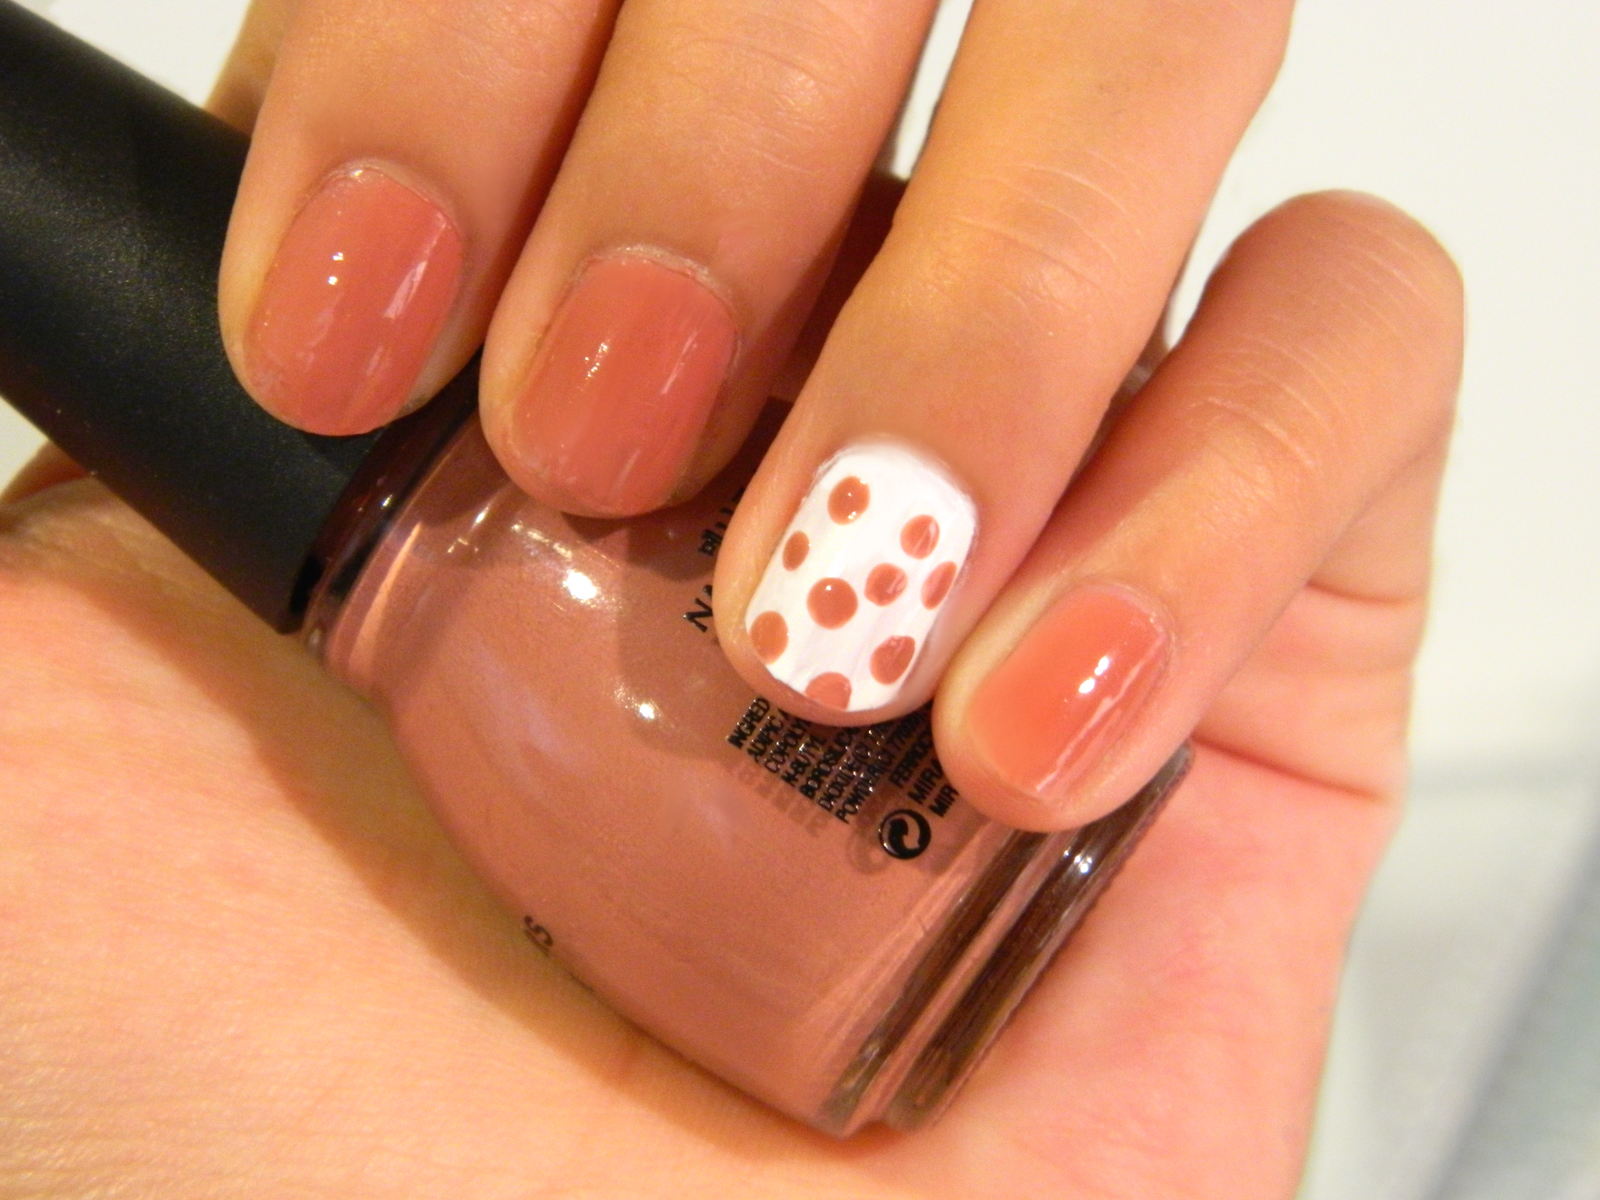 4. Cute Polka Dot and Striped Nail Ideas - wide 6